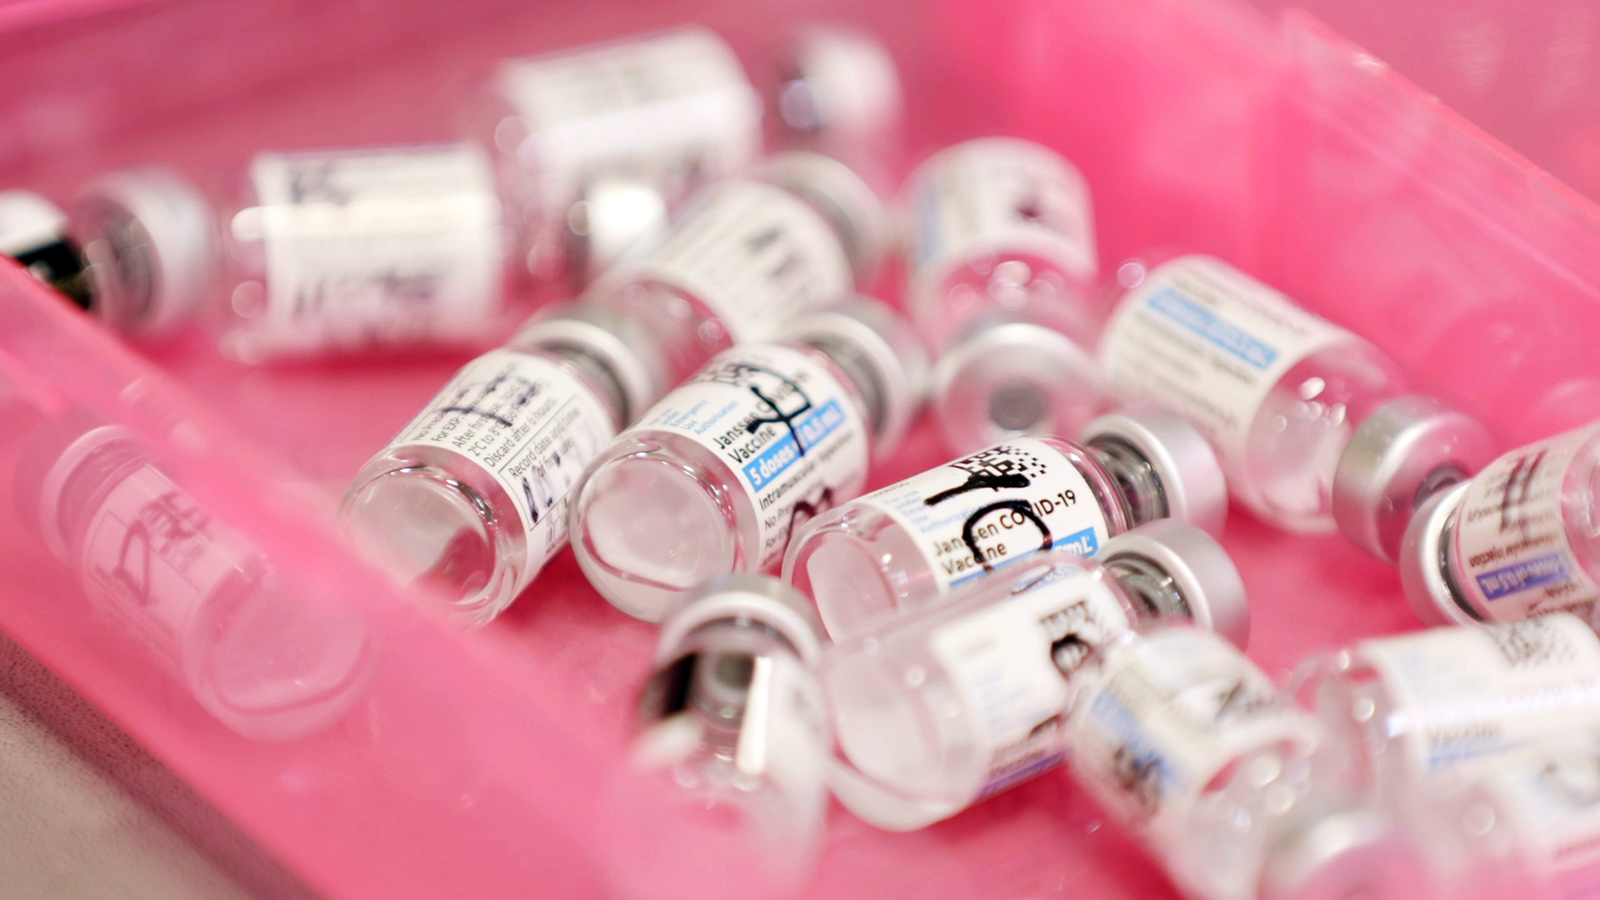 Vials of Johnson & Johnson coronavirus vaccine doses sit in a tray